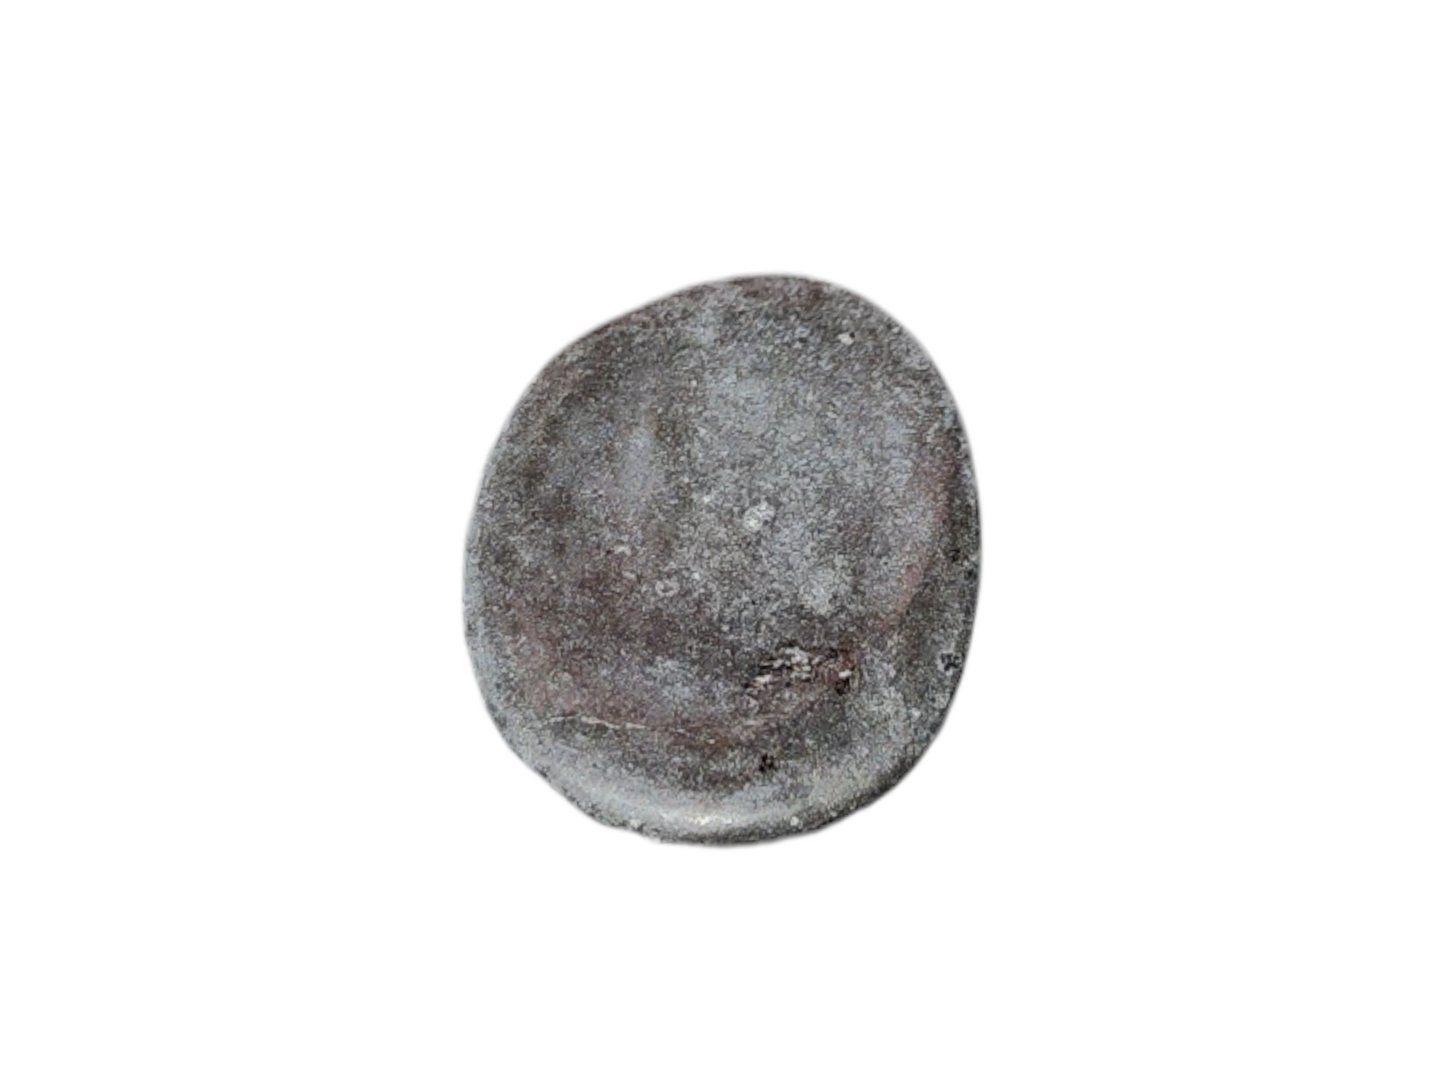 Black Tourmaline Pocket Stones w/Thumb Indent | Reiki Charged